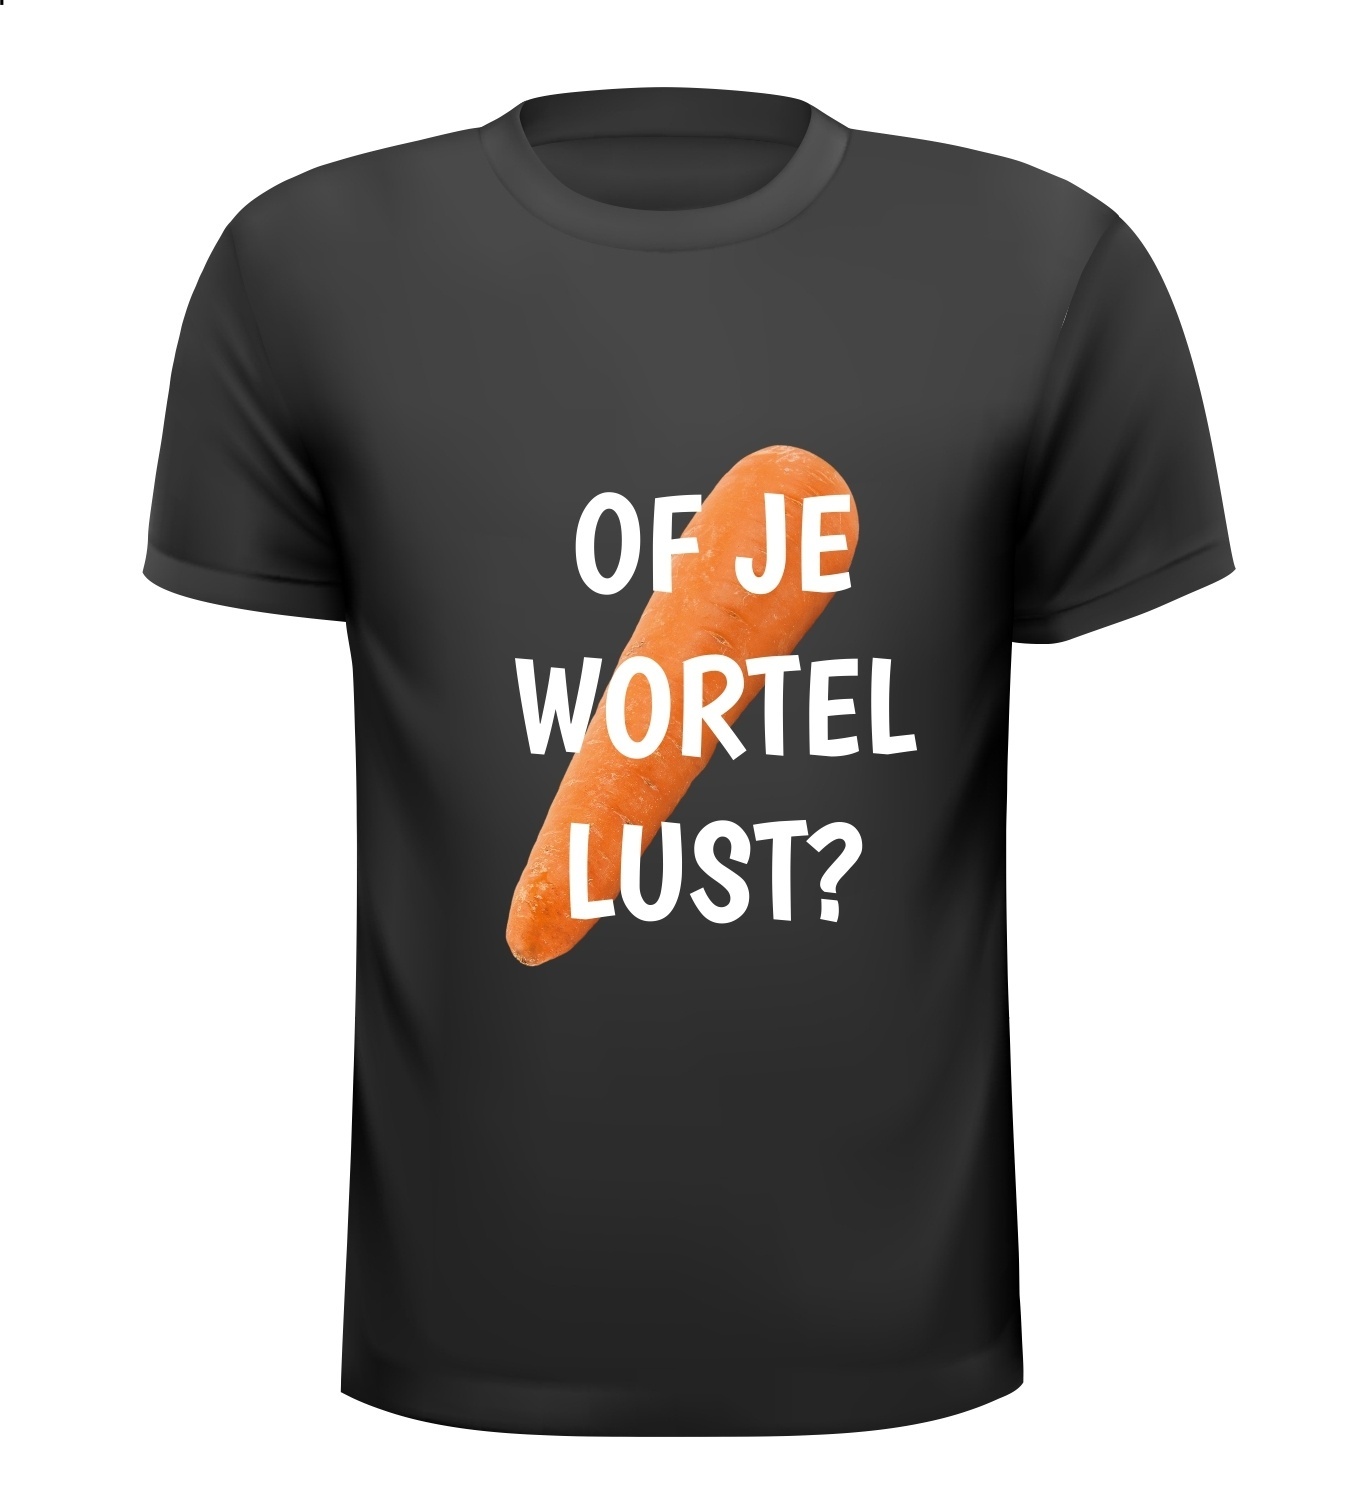 Of je wortel lust T-shirt fruit wortels oranje